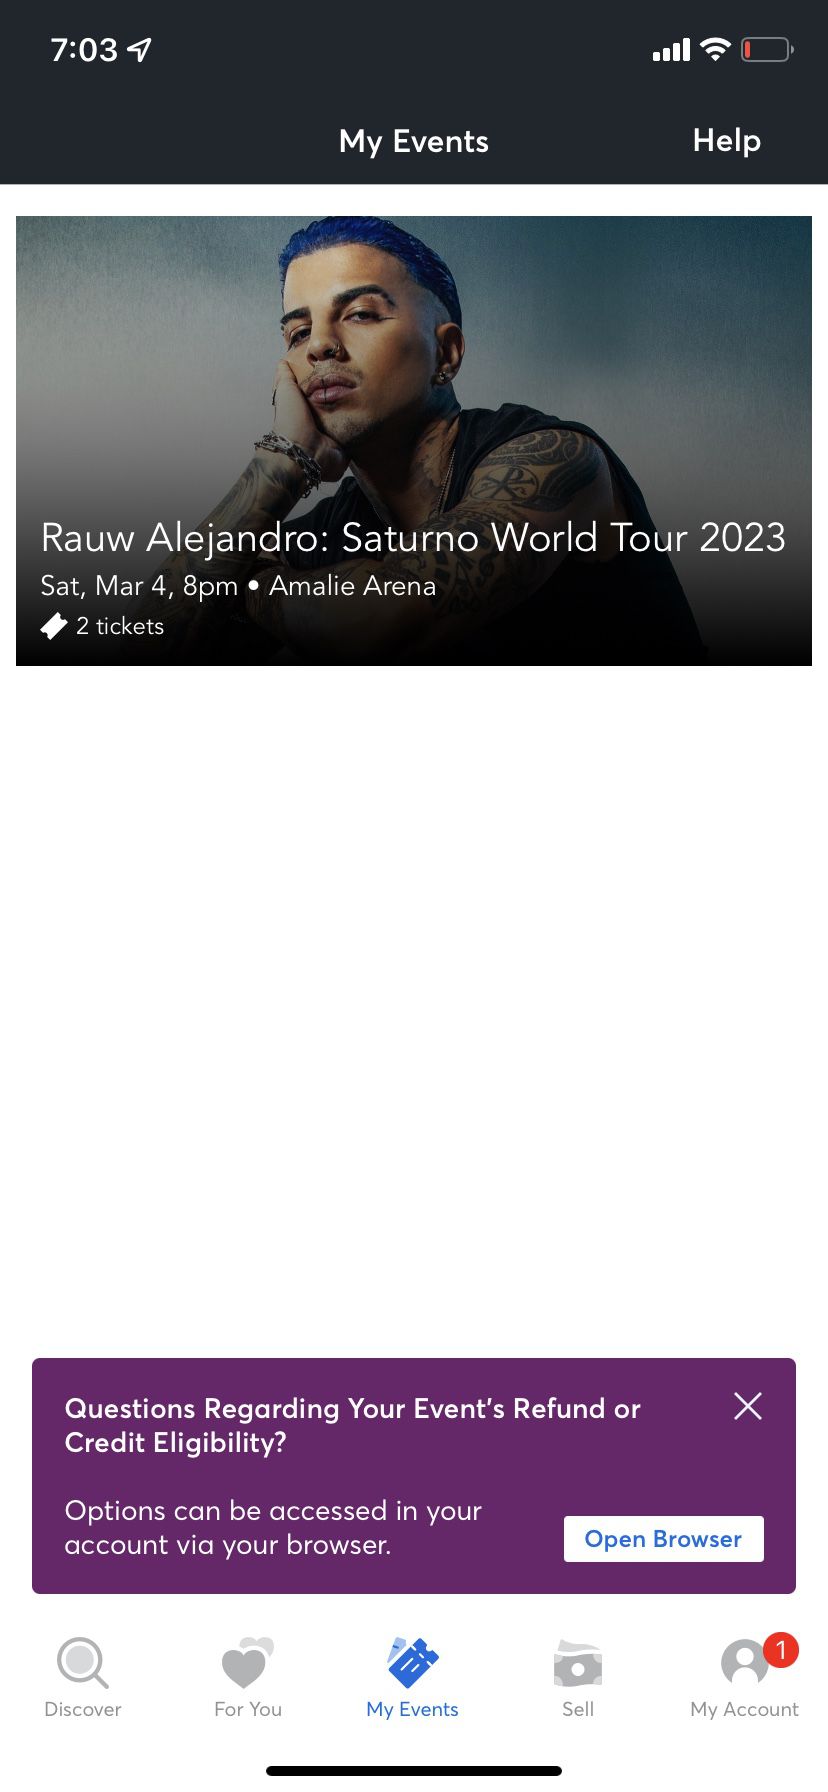 RAUW ALEJANDRO SATURNO WORLD TOUR TICKETS